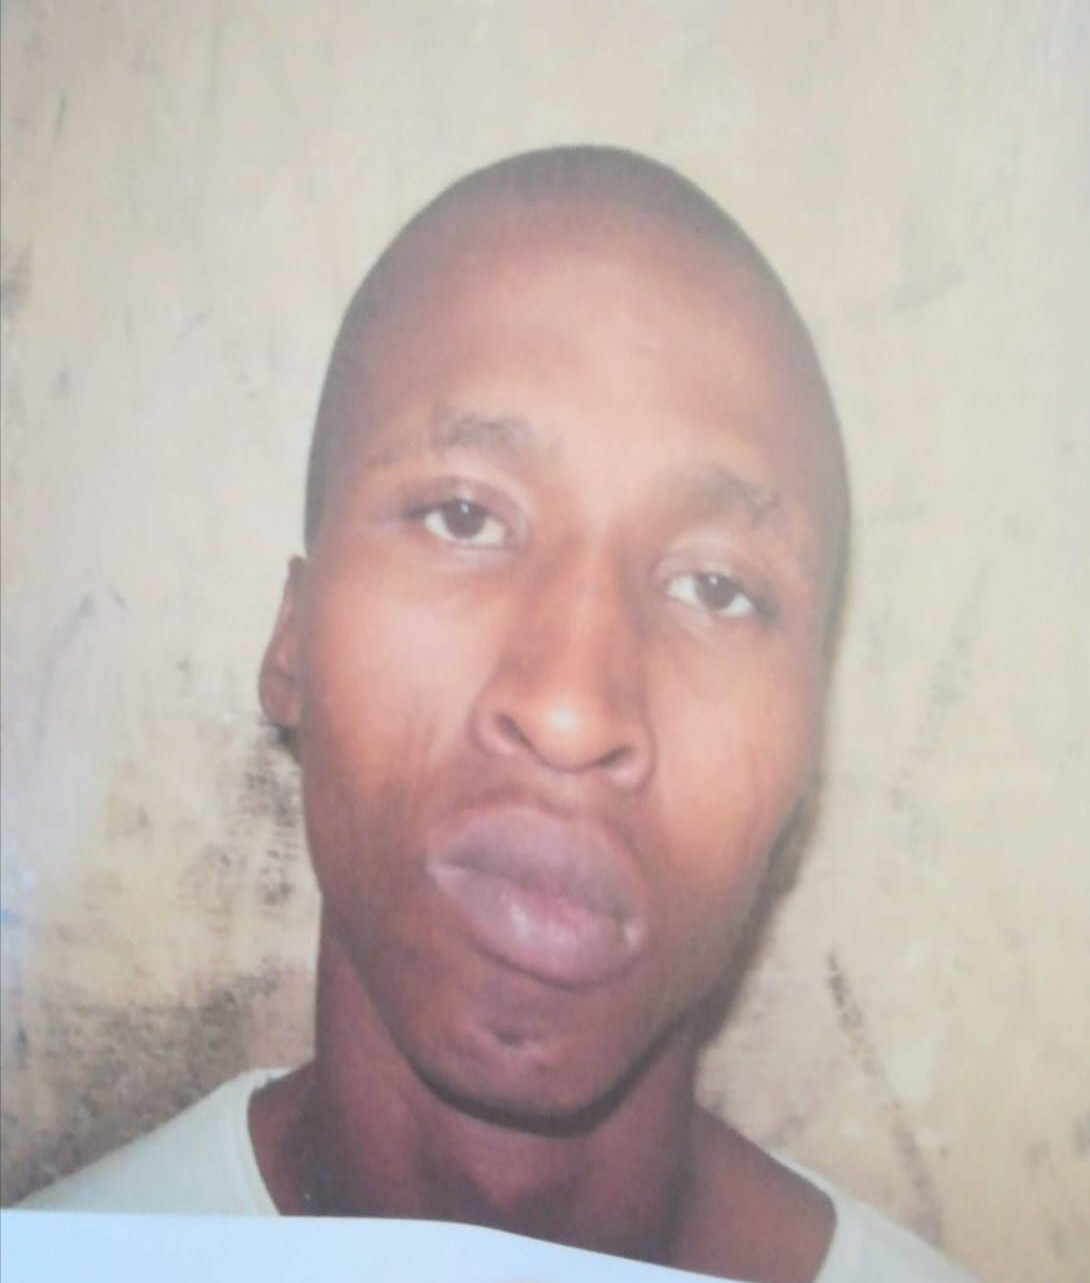 Criminal sentenced to 130 years imprisonment in Gqeberha